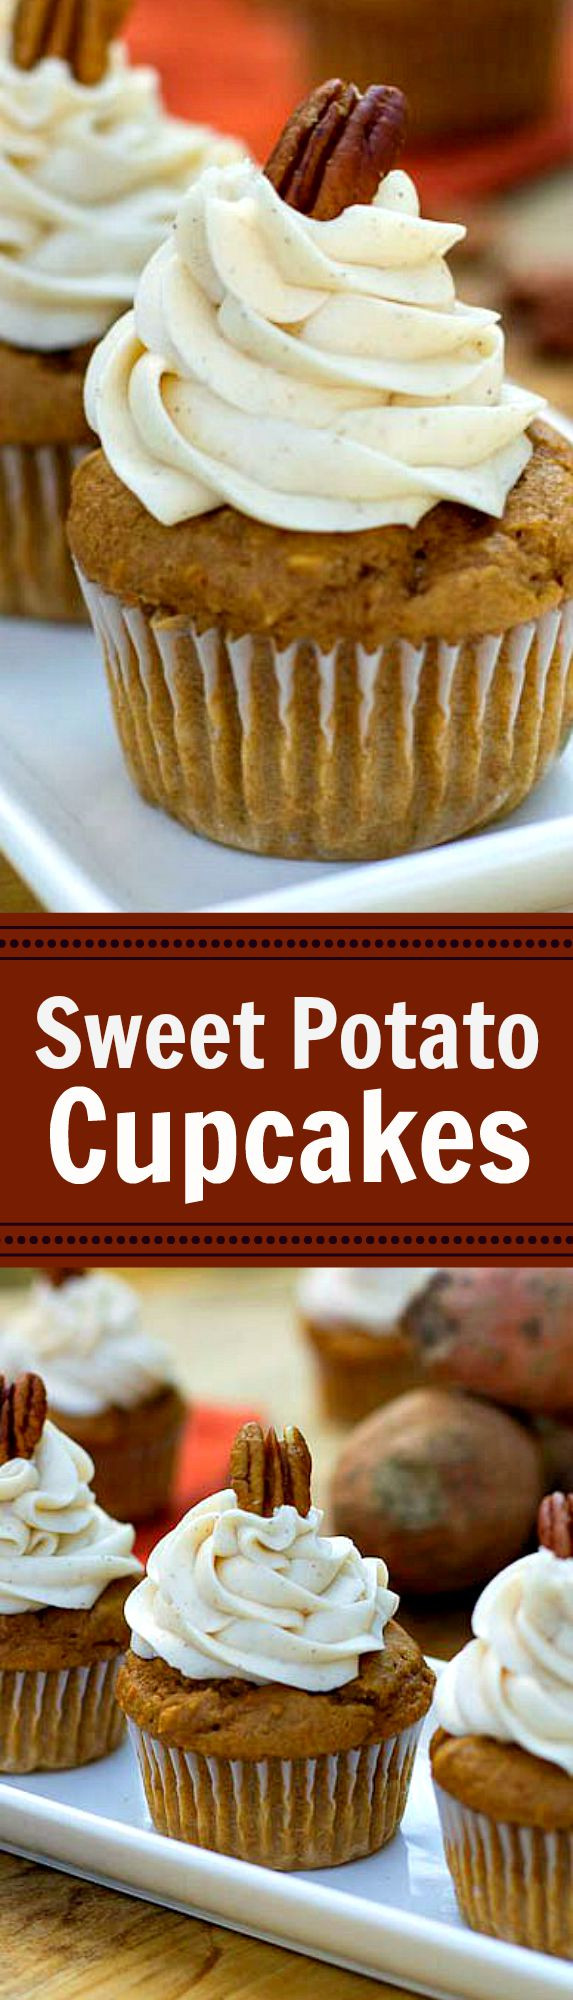 Gourmet Cupcake Recipes Using Cake Mix
 Sweet Potato Cupcakes with Spiced Buttercream